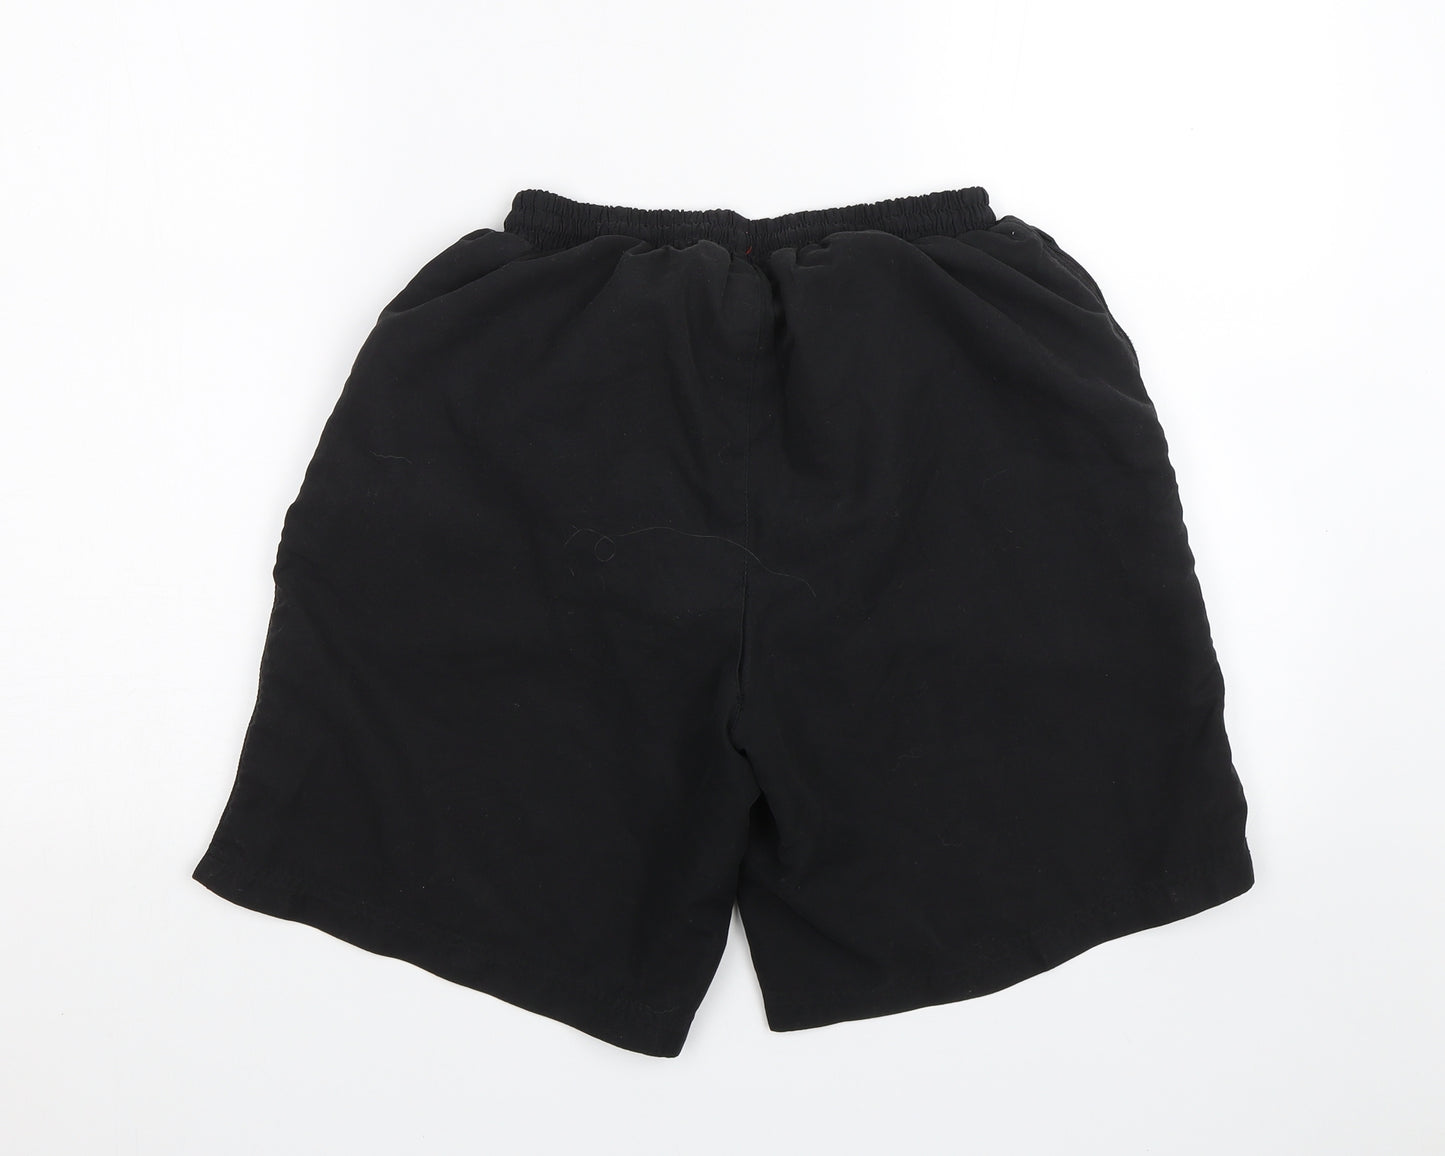 Slazenger Mens Black   Athletic Shorts Size S